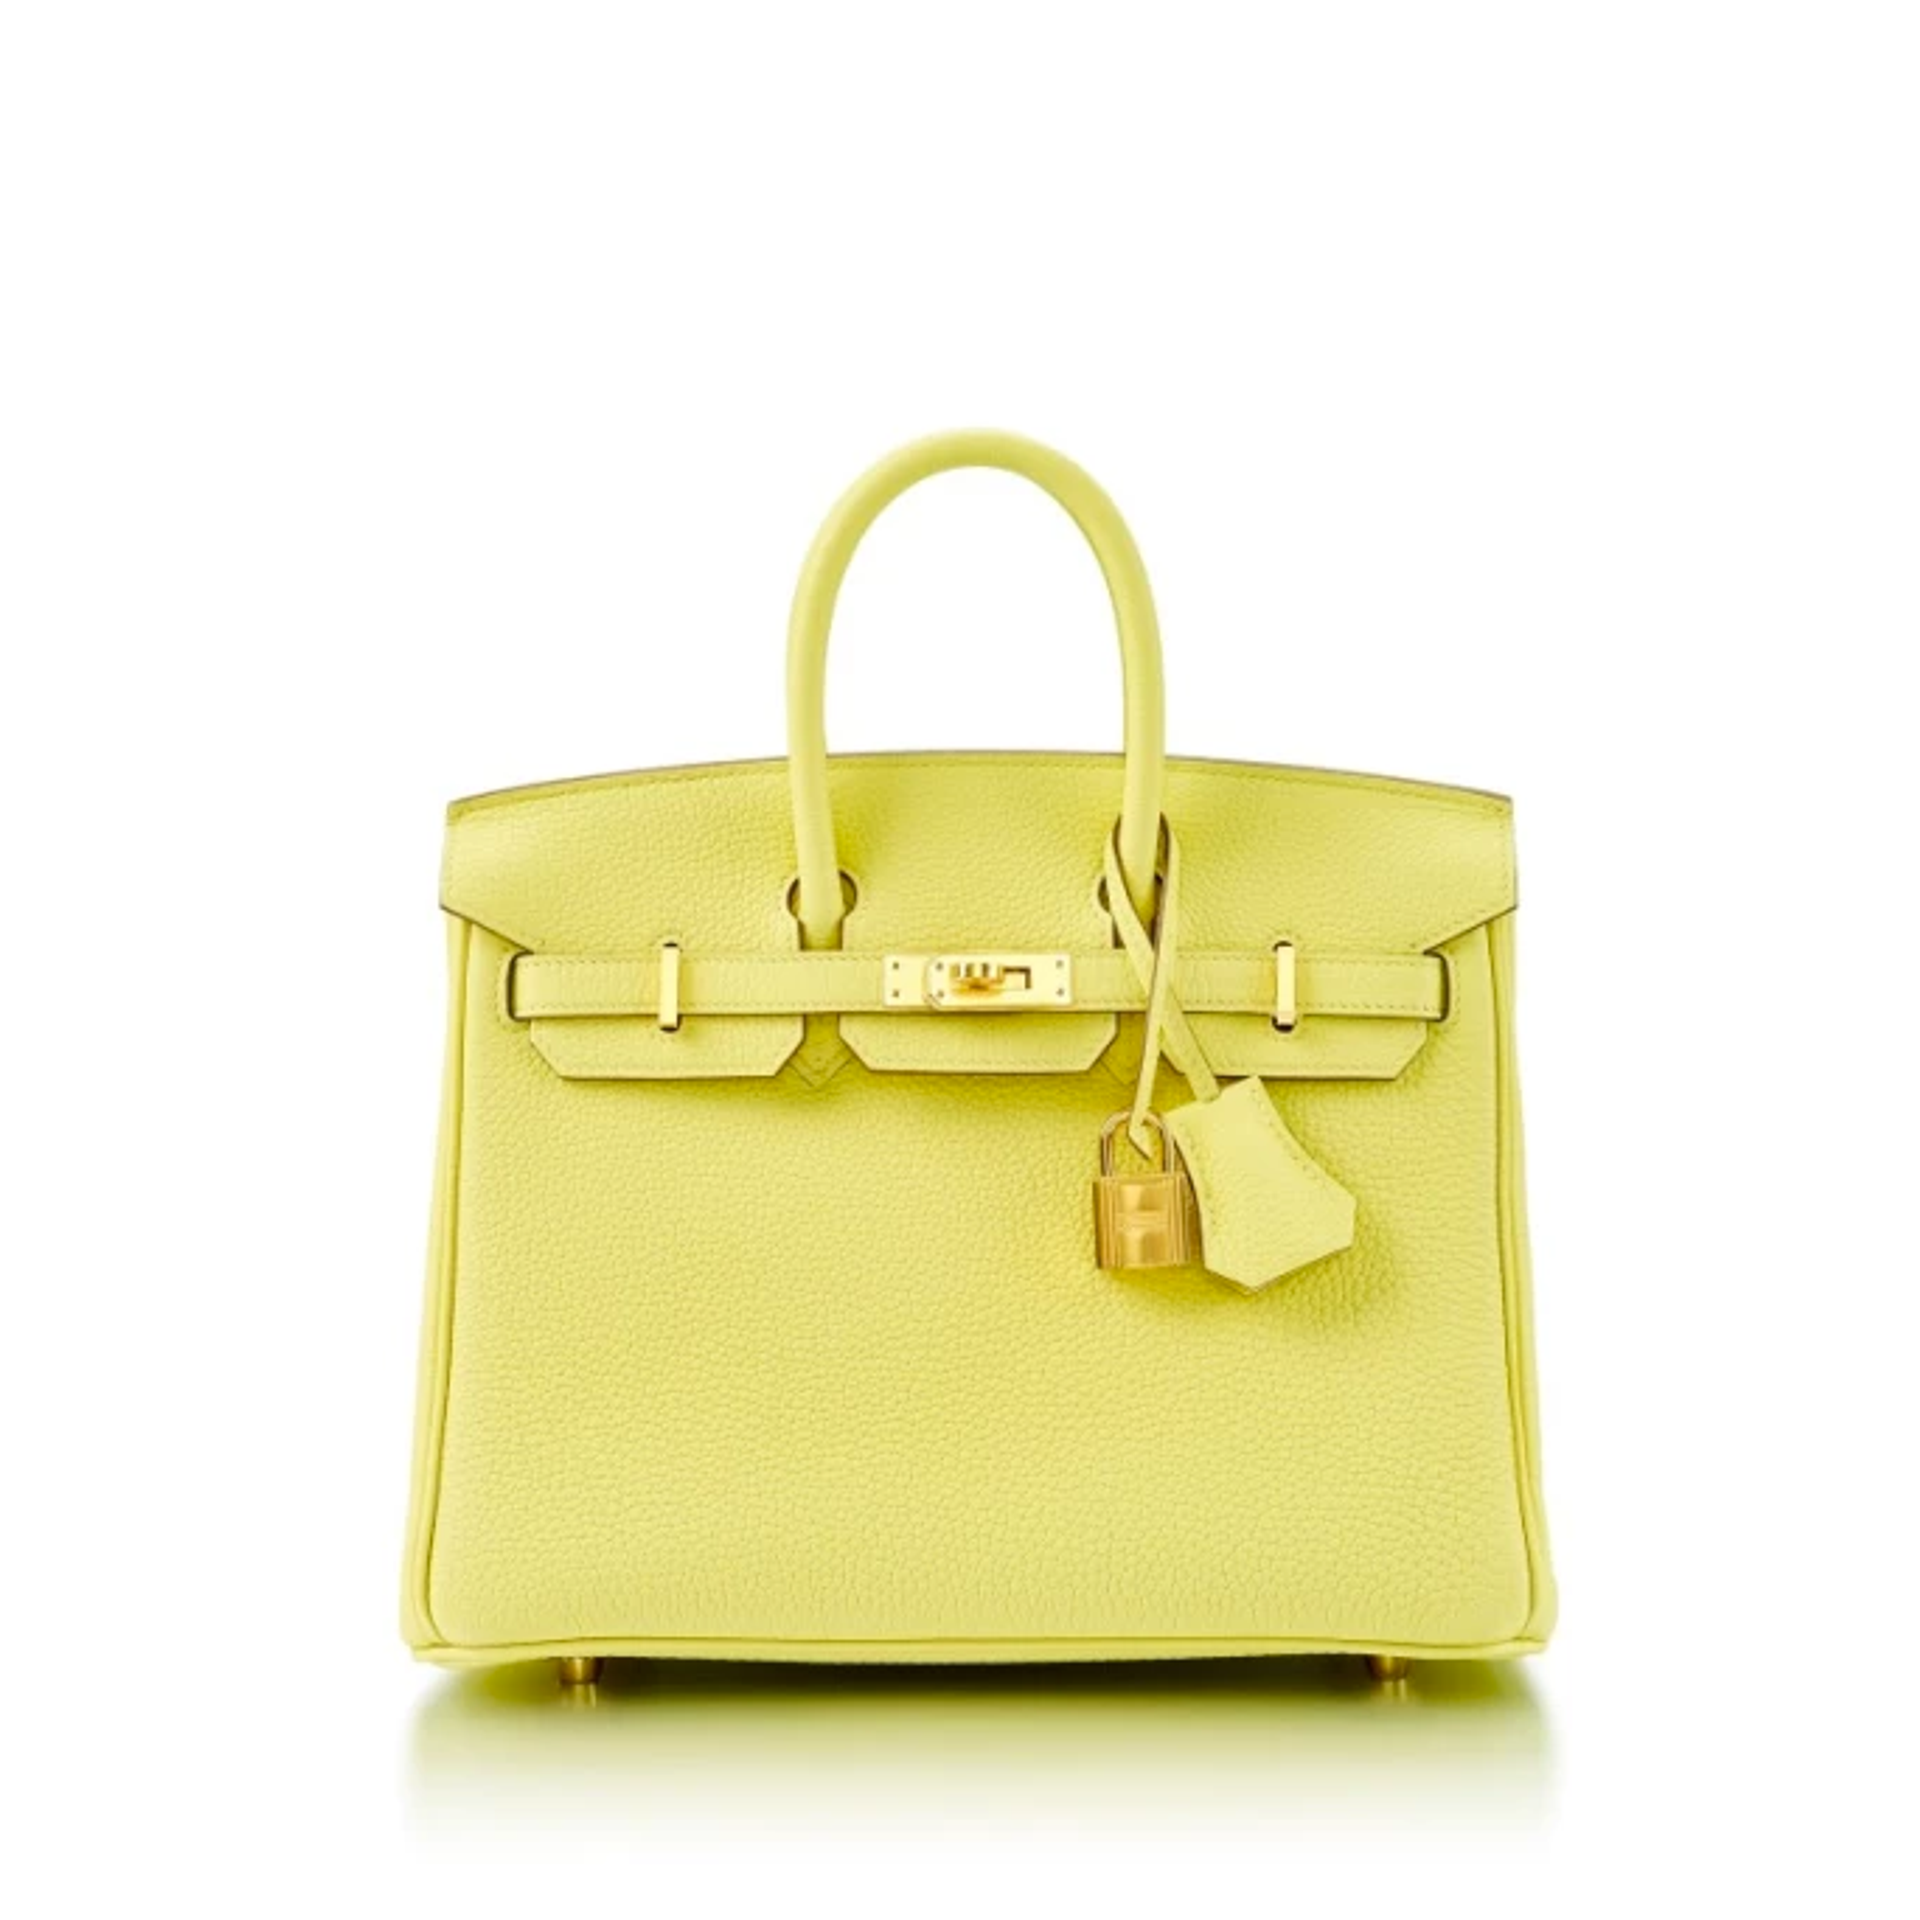 The History of Iconic Luxury Bags: Chanel, LV speedy, Birkin, Goyard